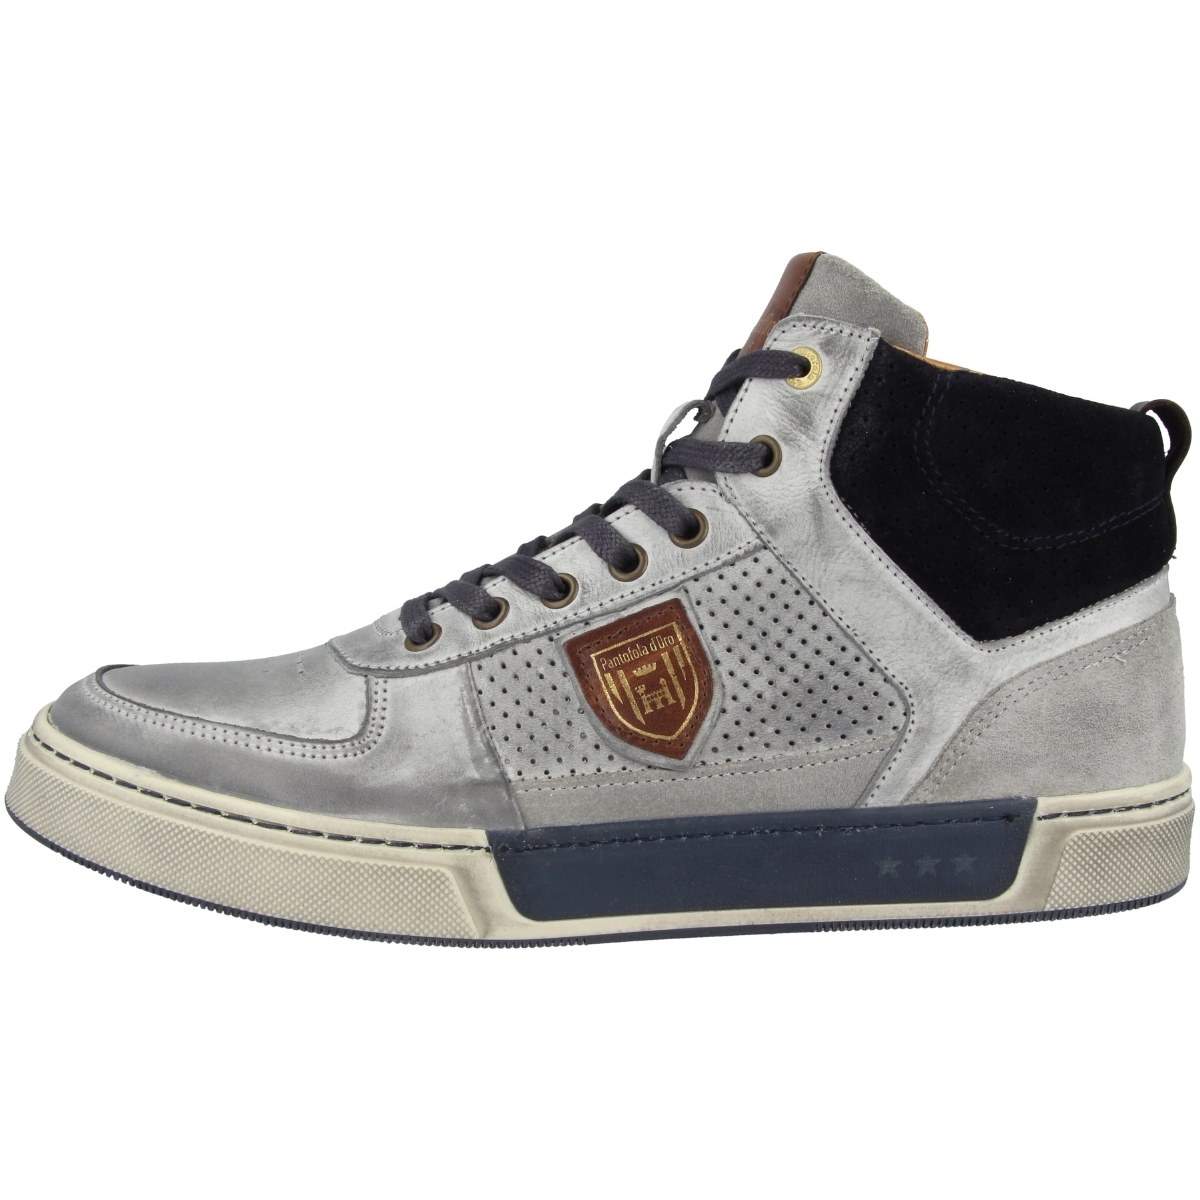 Pantofola d Oro Frederico Uomo Mid Schuhe High Top Sneaker shell 10183023.JCU 